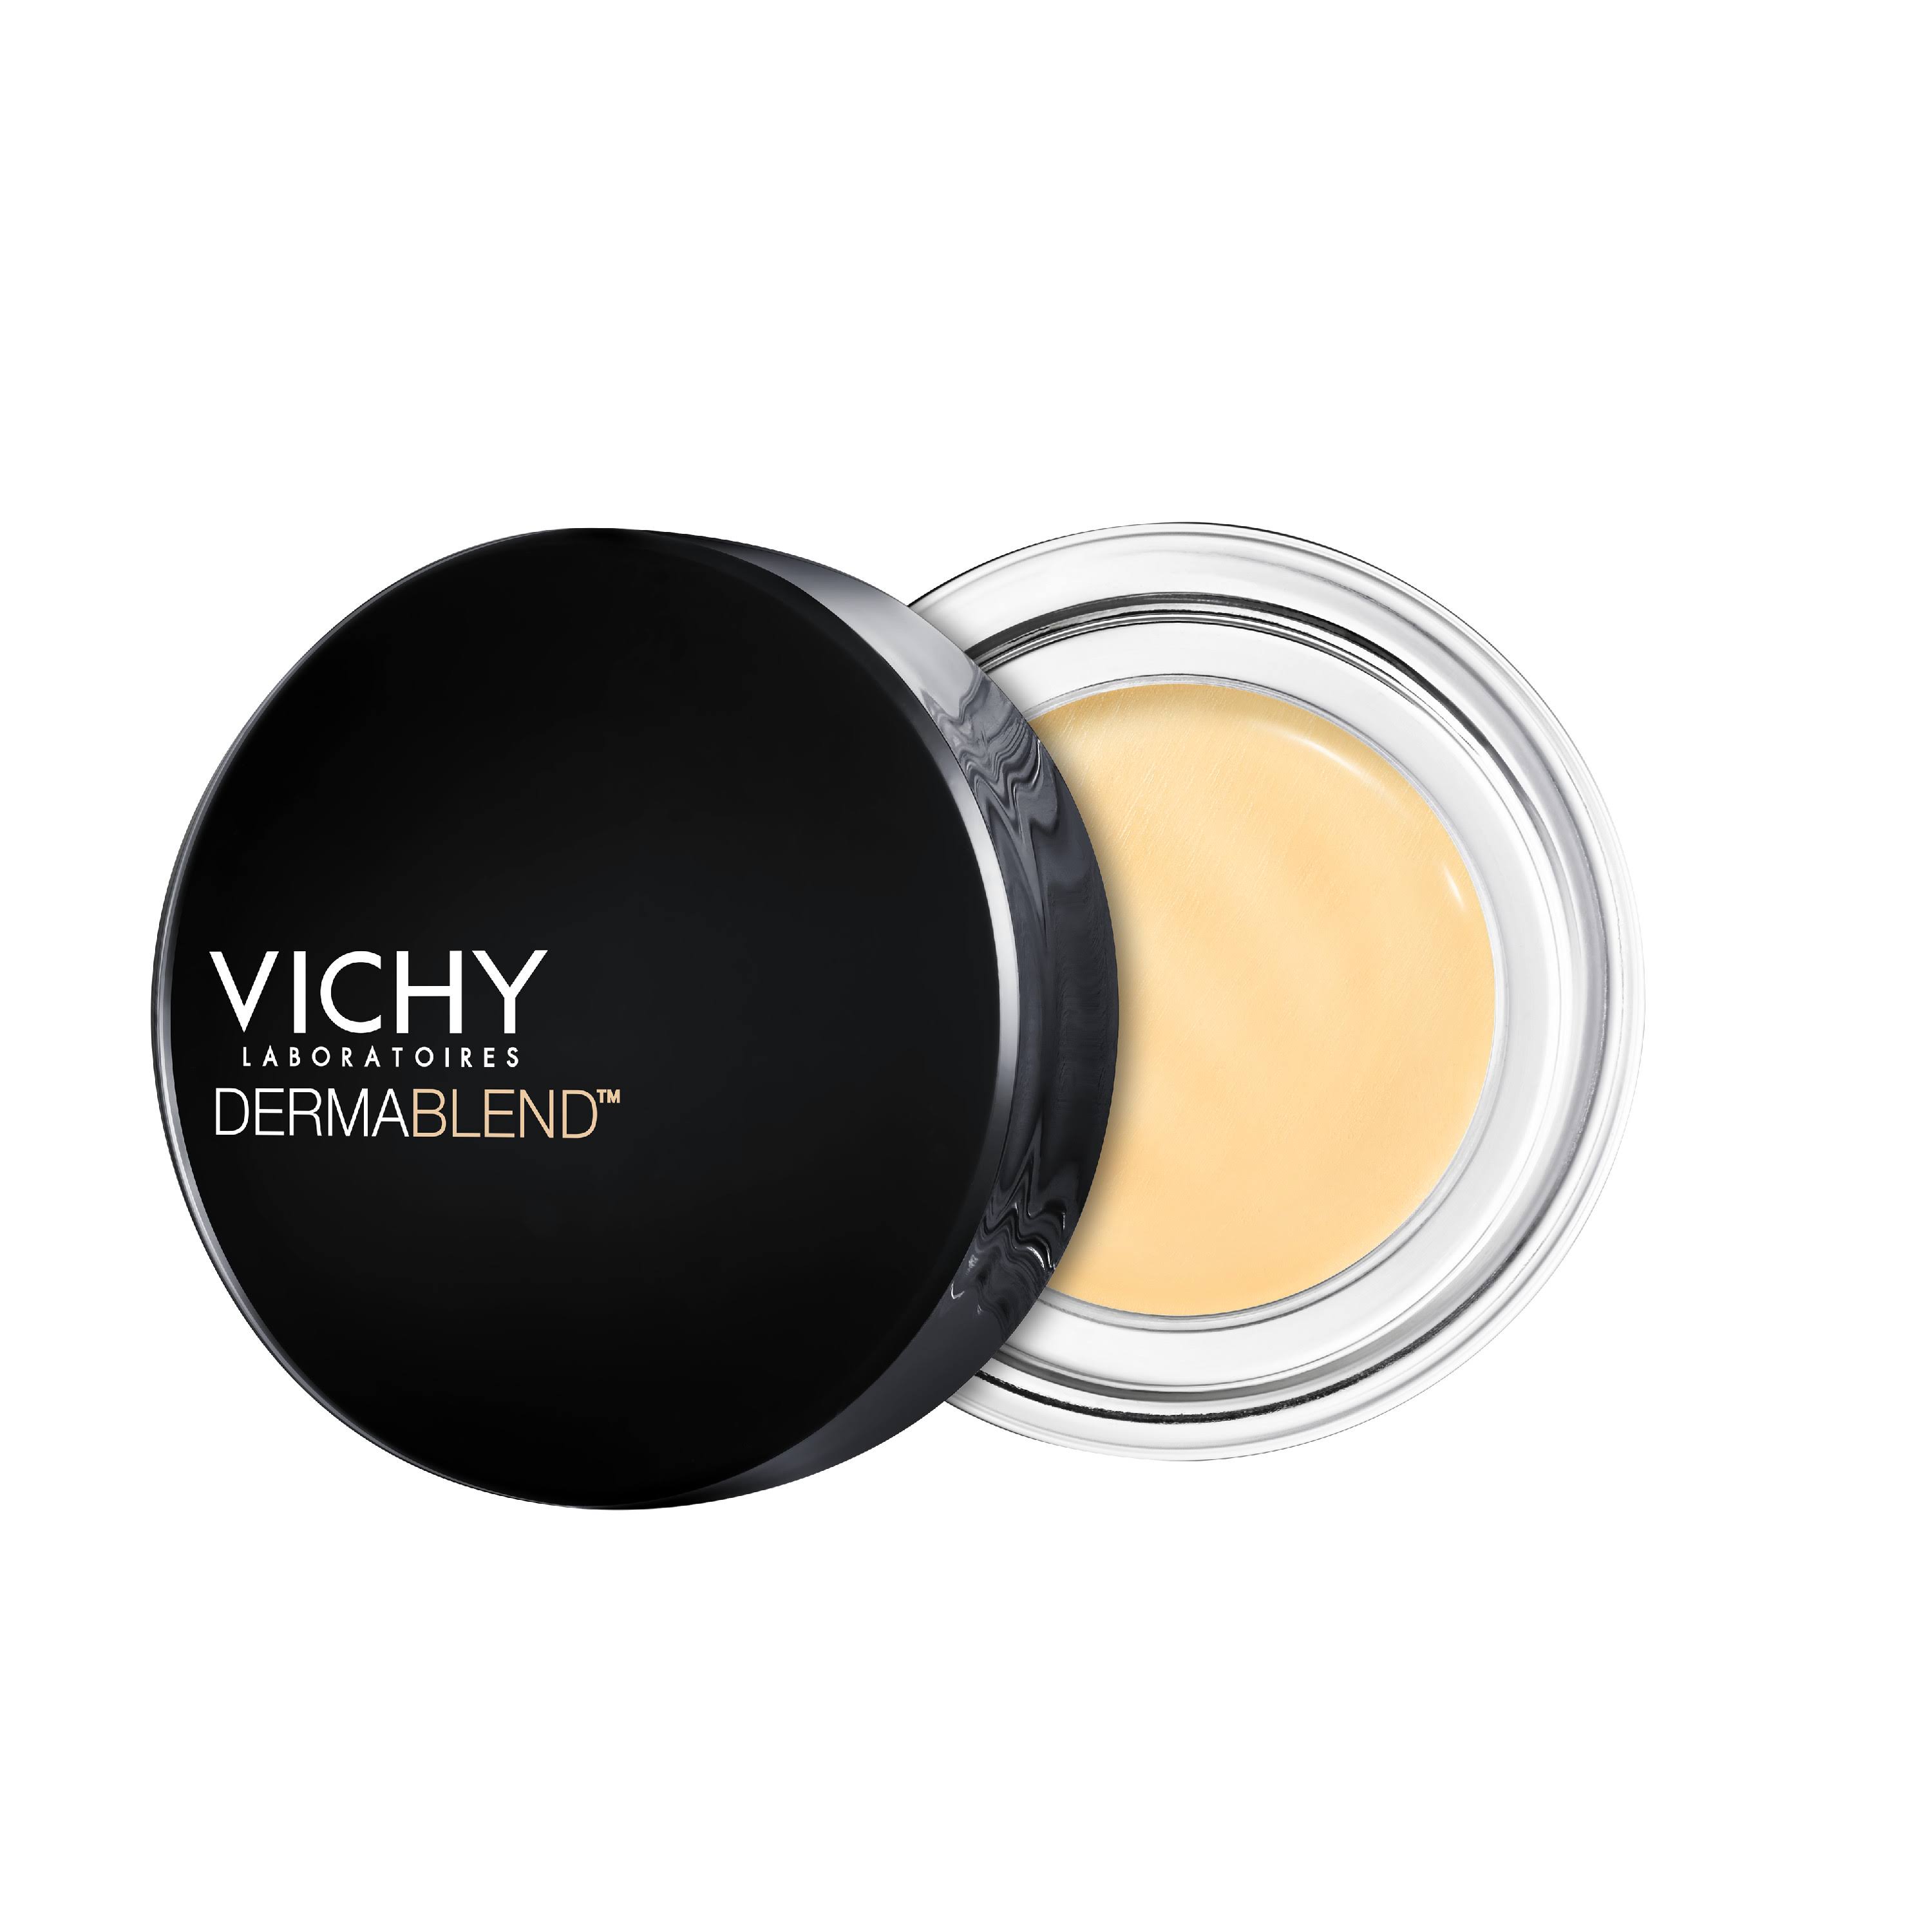 Vichy Dermablend Colour Corrector - Yellow, 4.5g